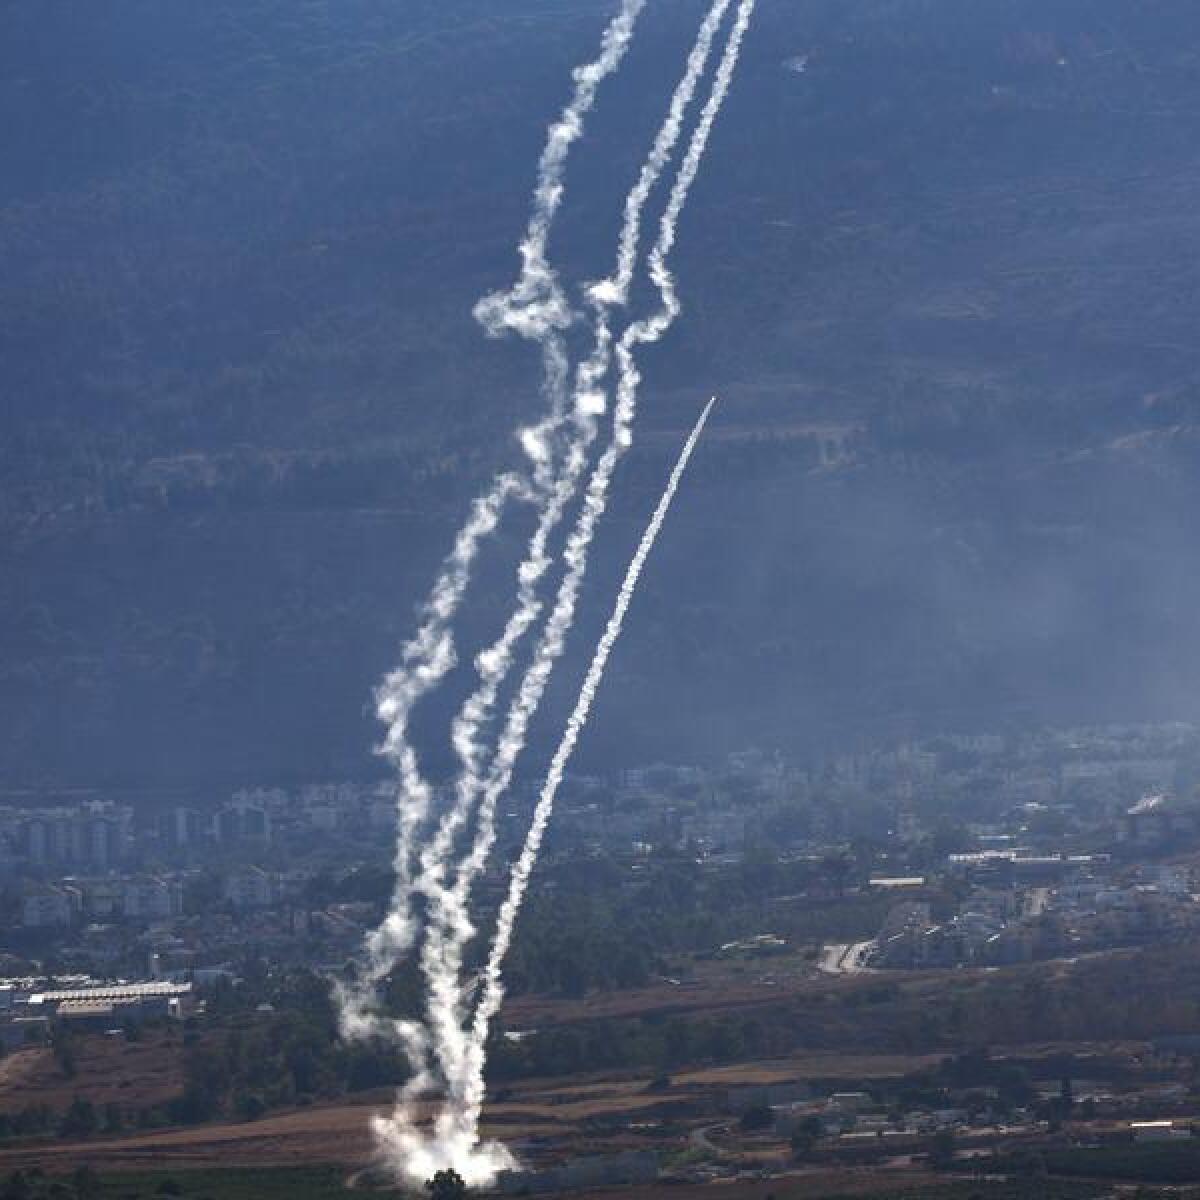 Israel intercepts a missile from Lebanon over Kiryat Shmona